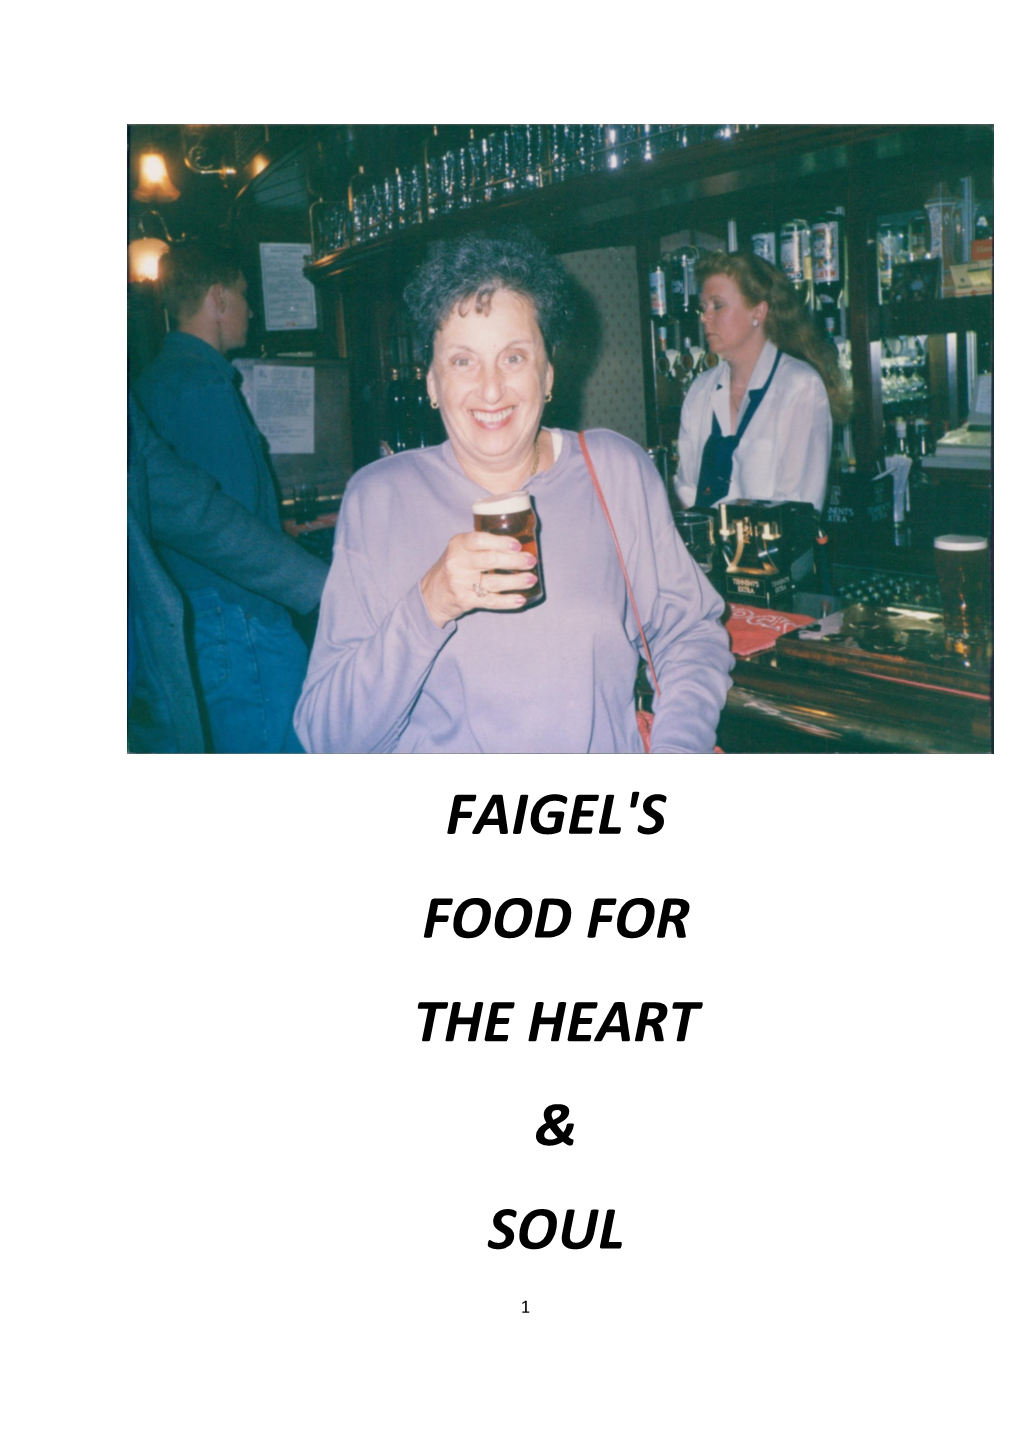 Faigel's Food for the Heart & Soul